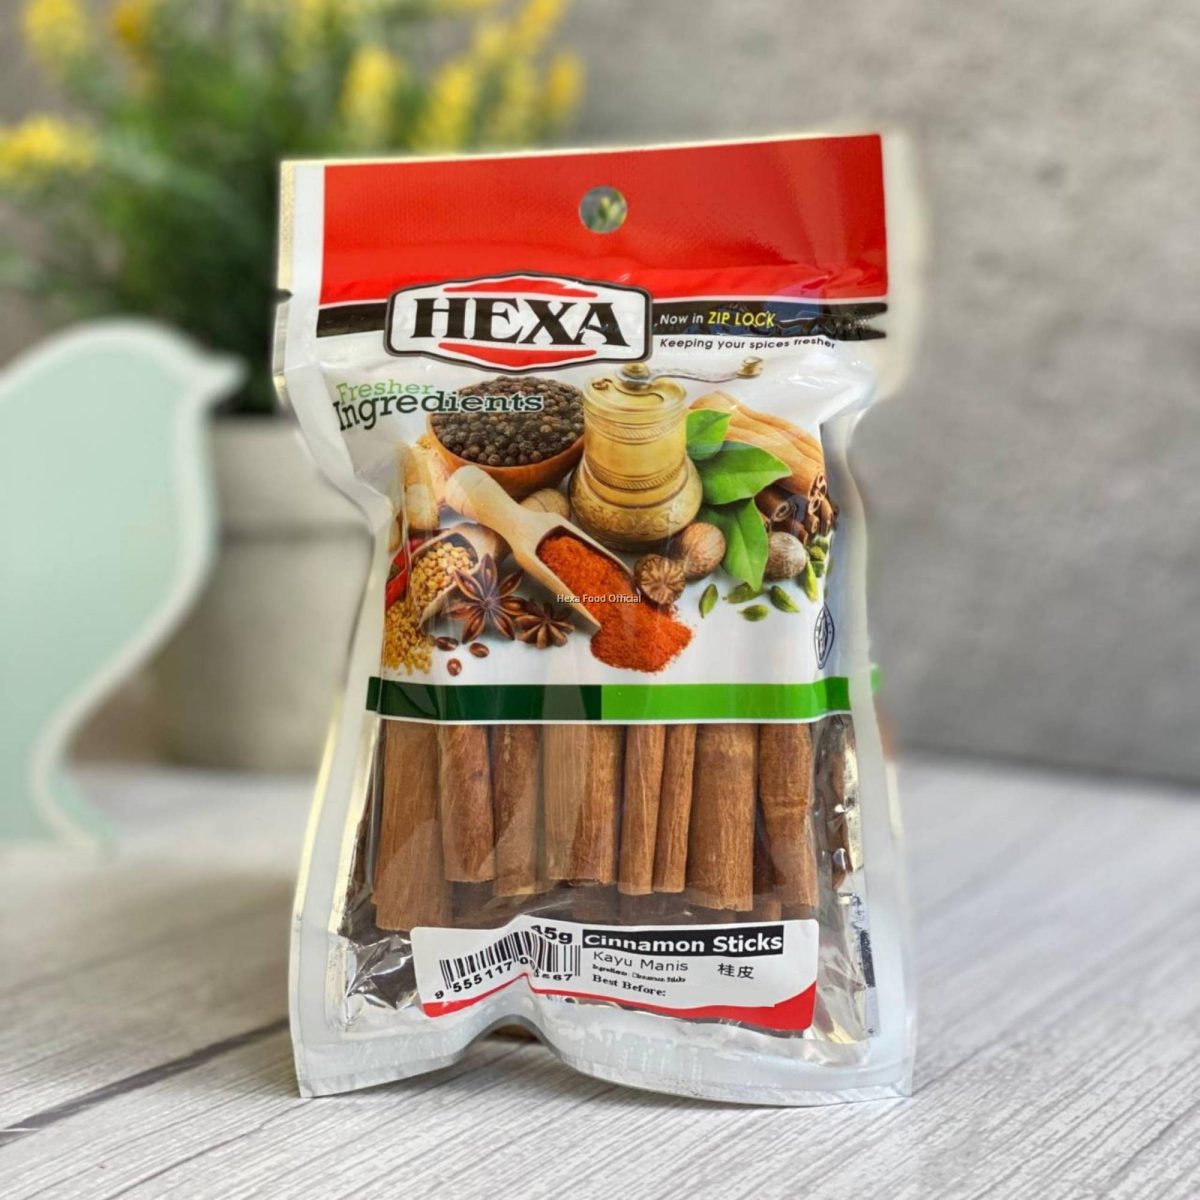 HEXA Cassia Cinnamon Sticks